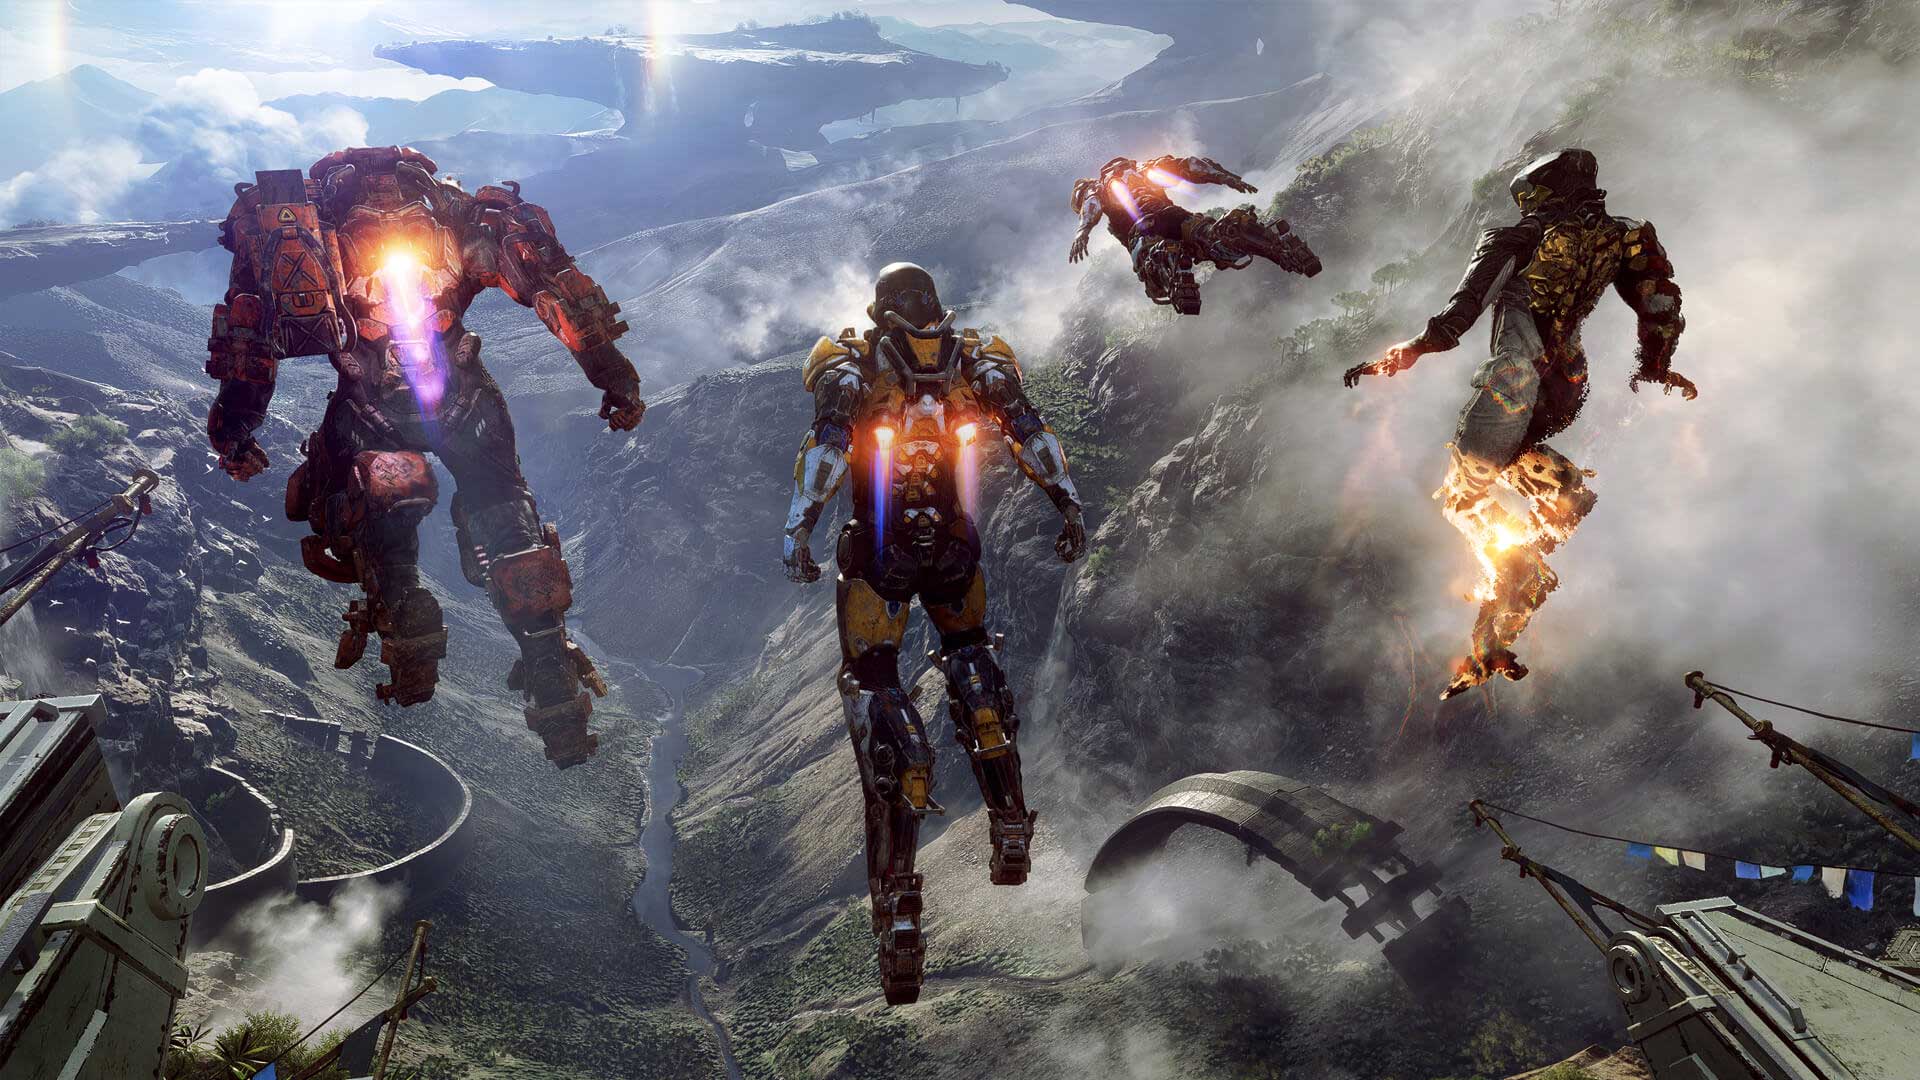 EA Announces New Bioware IP: “Anthem” - Destiny: Attack On Titanfall?